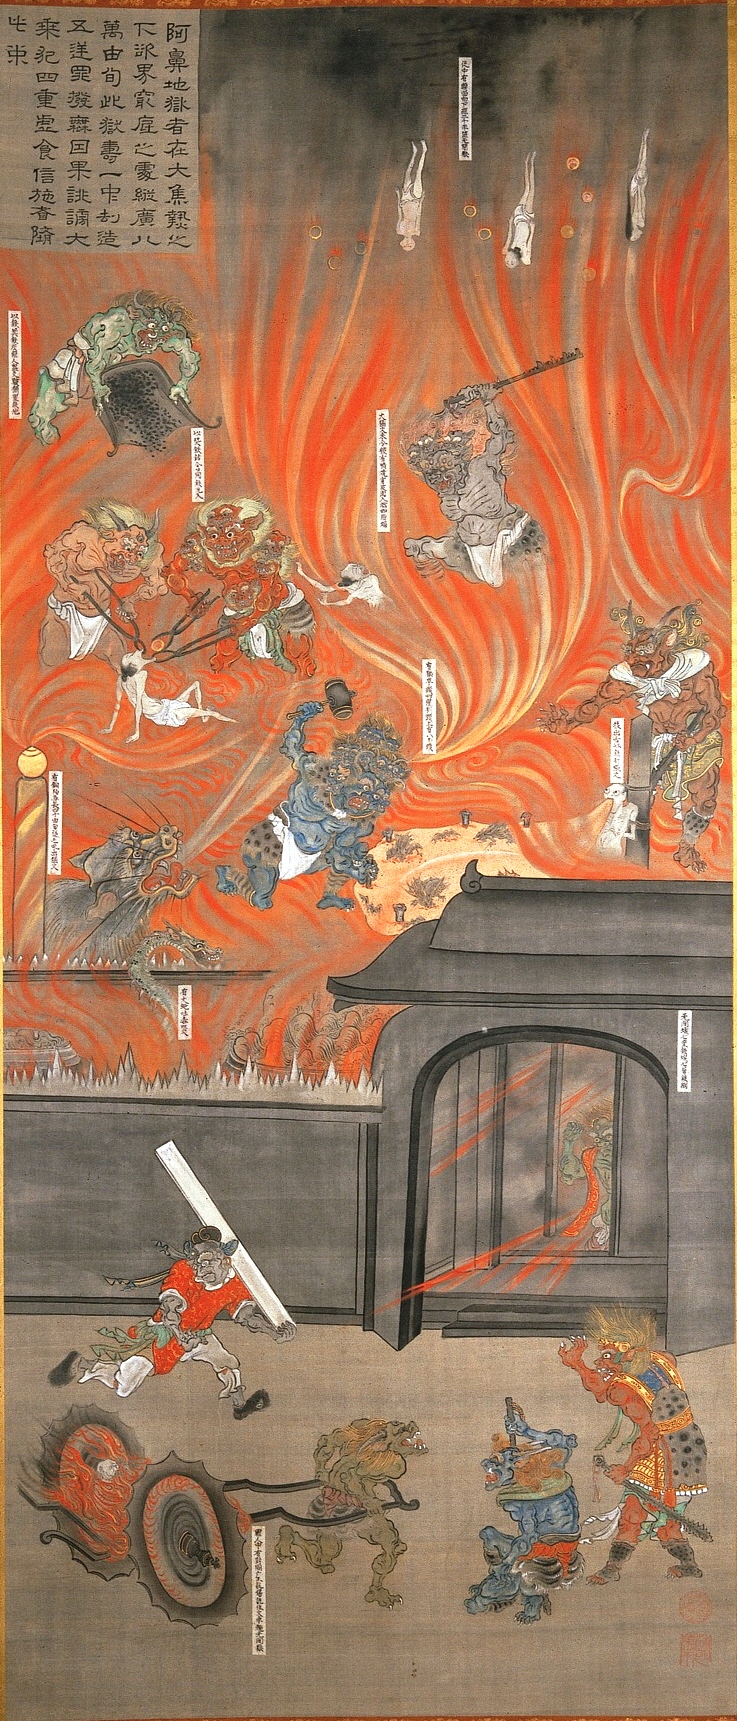 Hell in Japanese Art